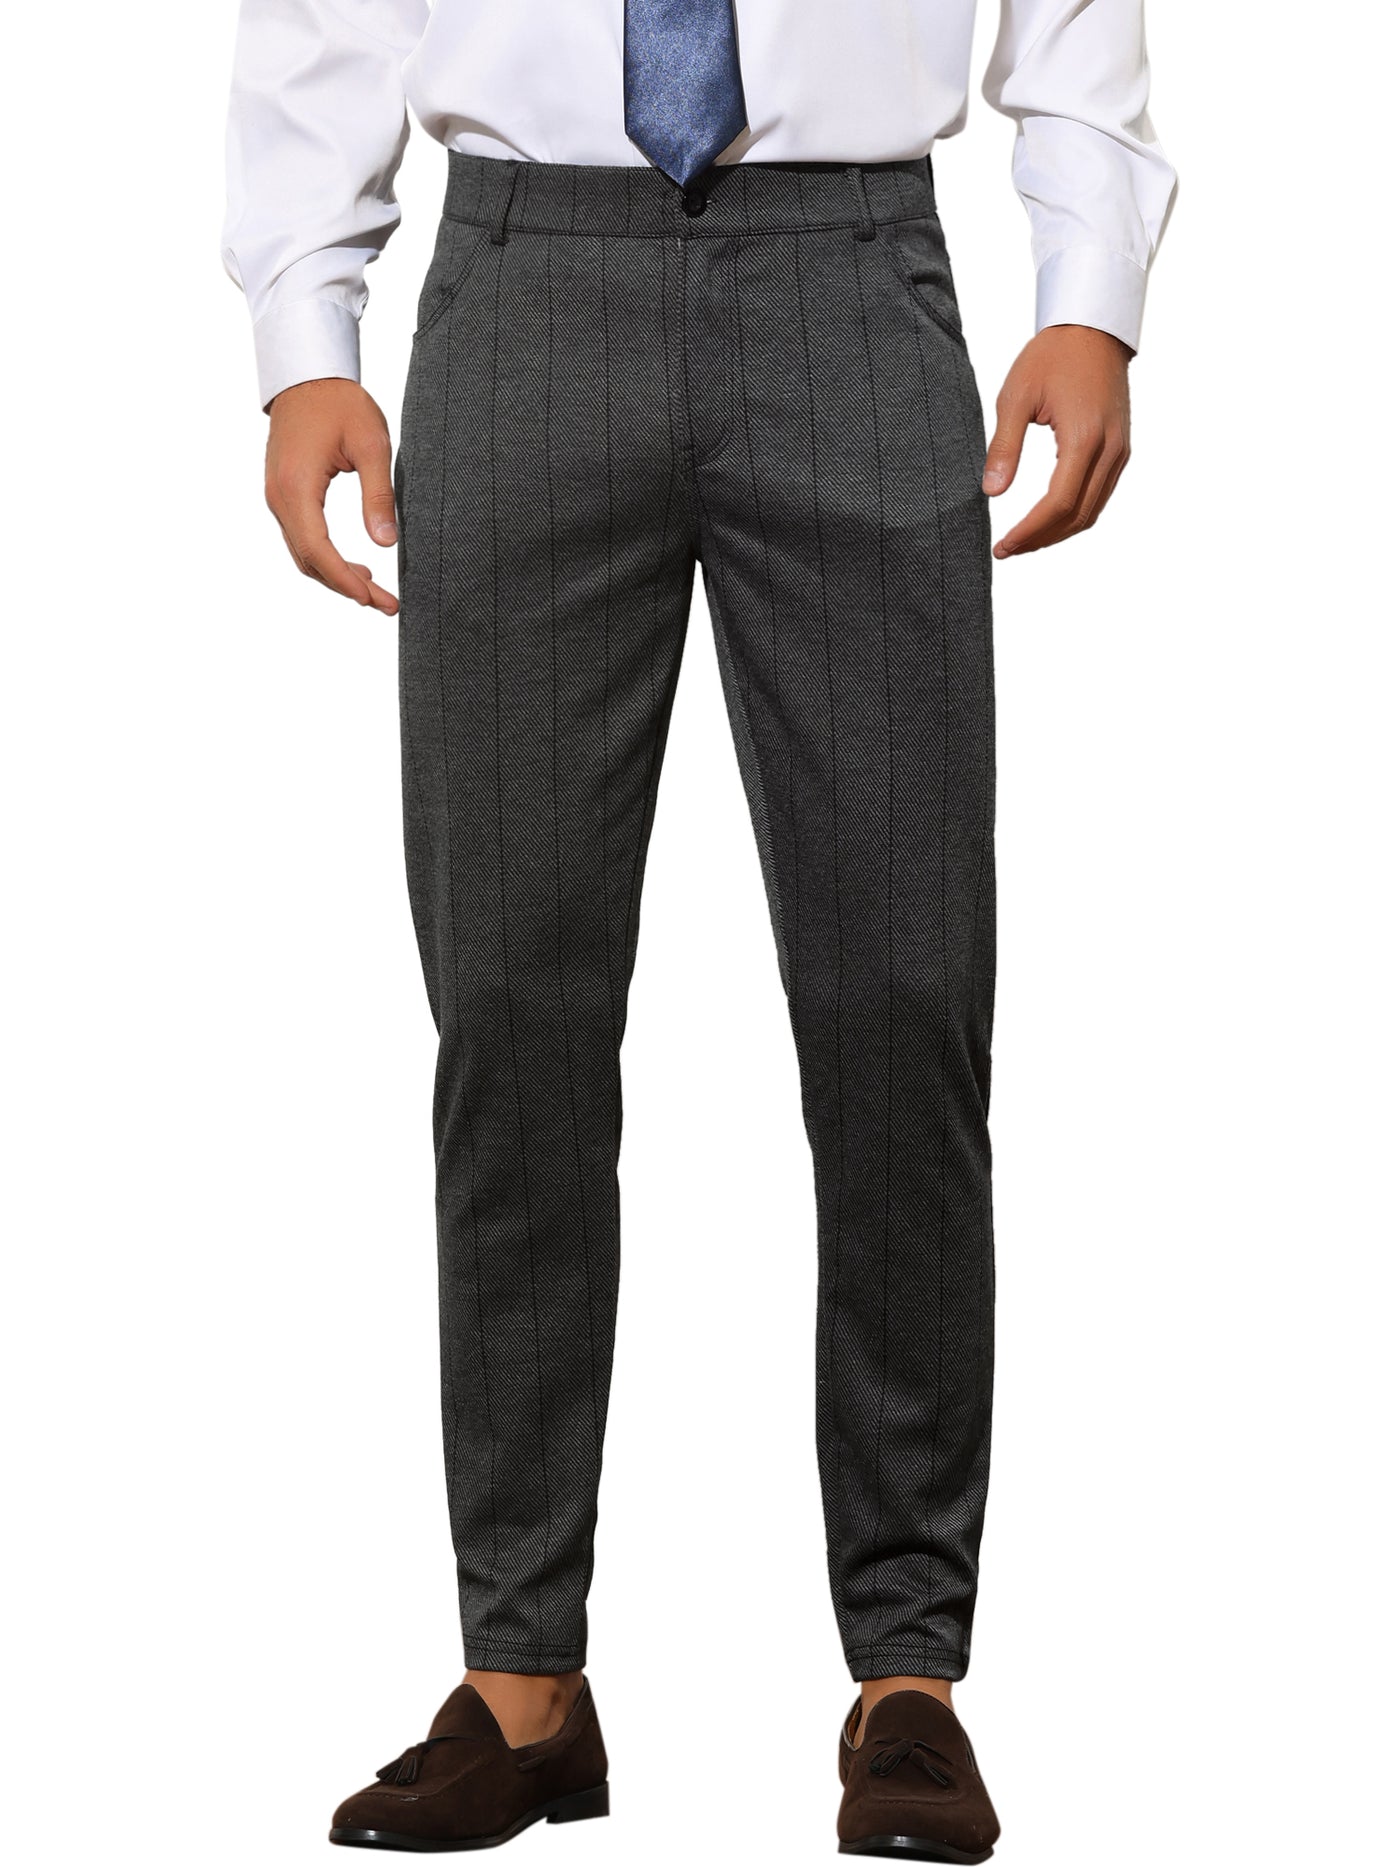 Bublédon Striped Pants for Men's Flat Front Skinny Formal Wedding Dress Trousers